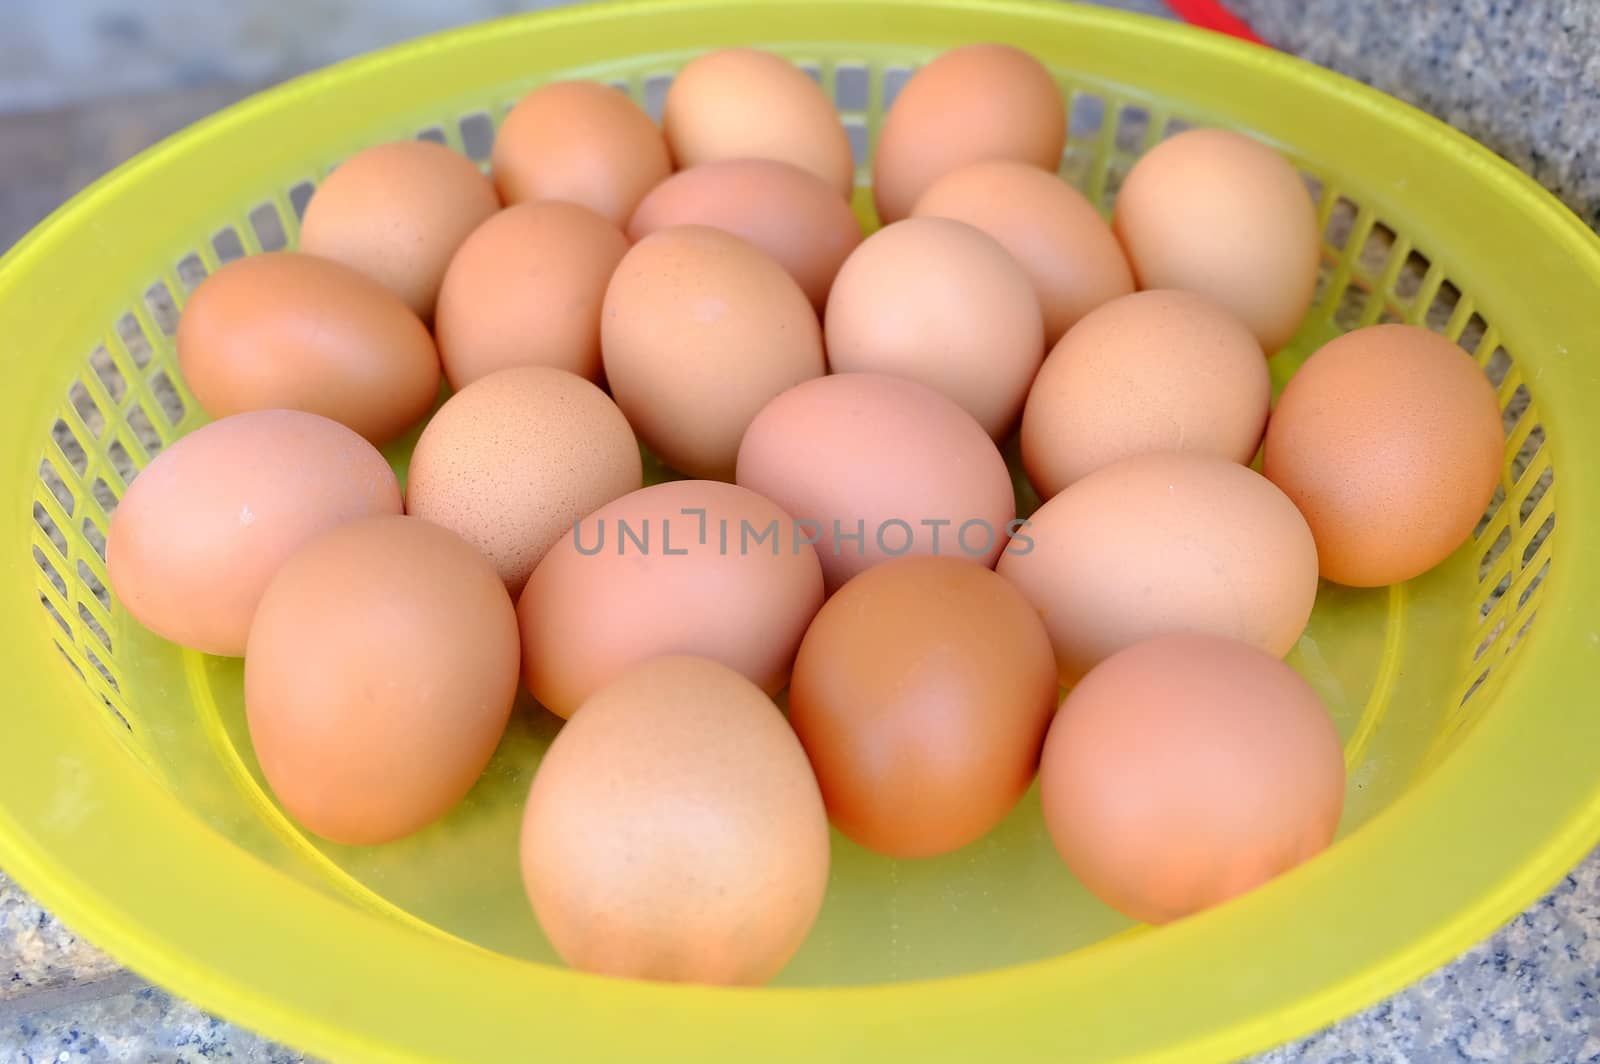 Eggs in Yellow Plastic Tray.